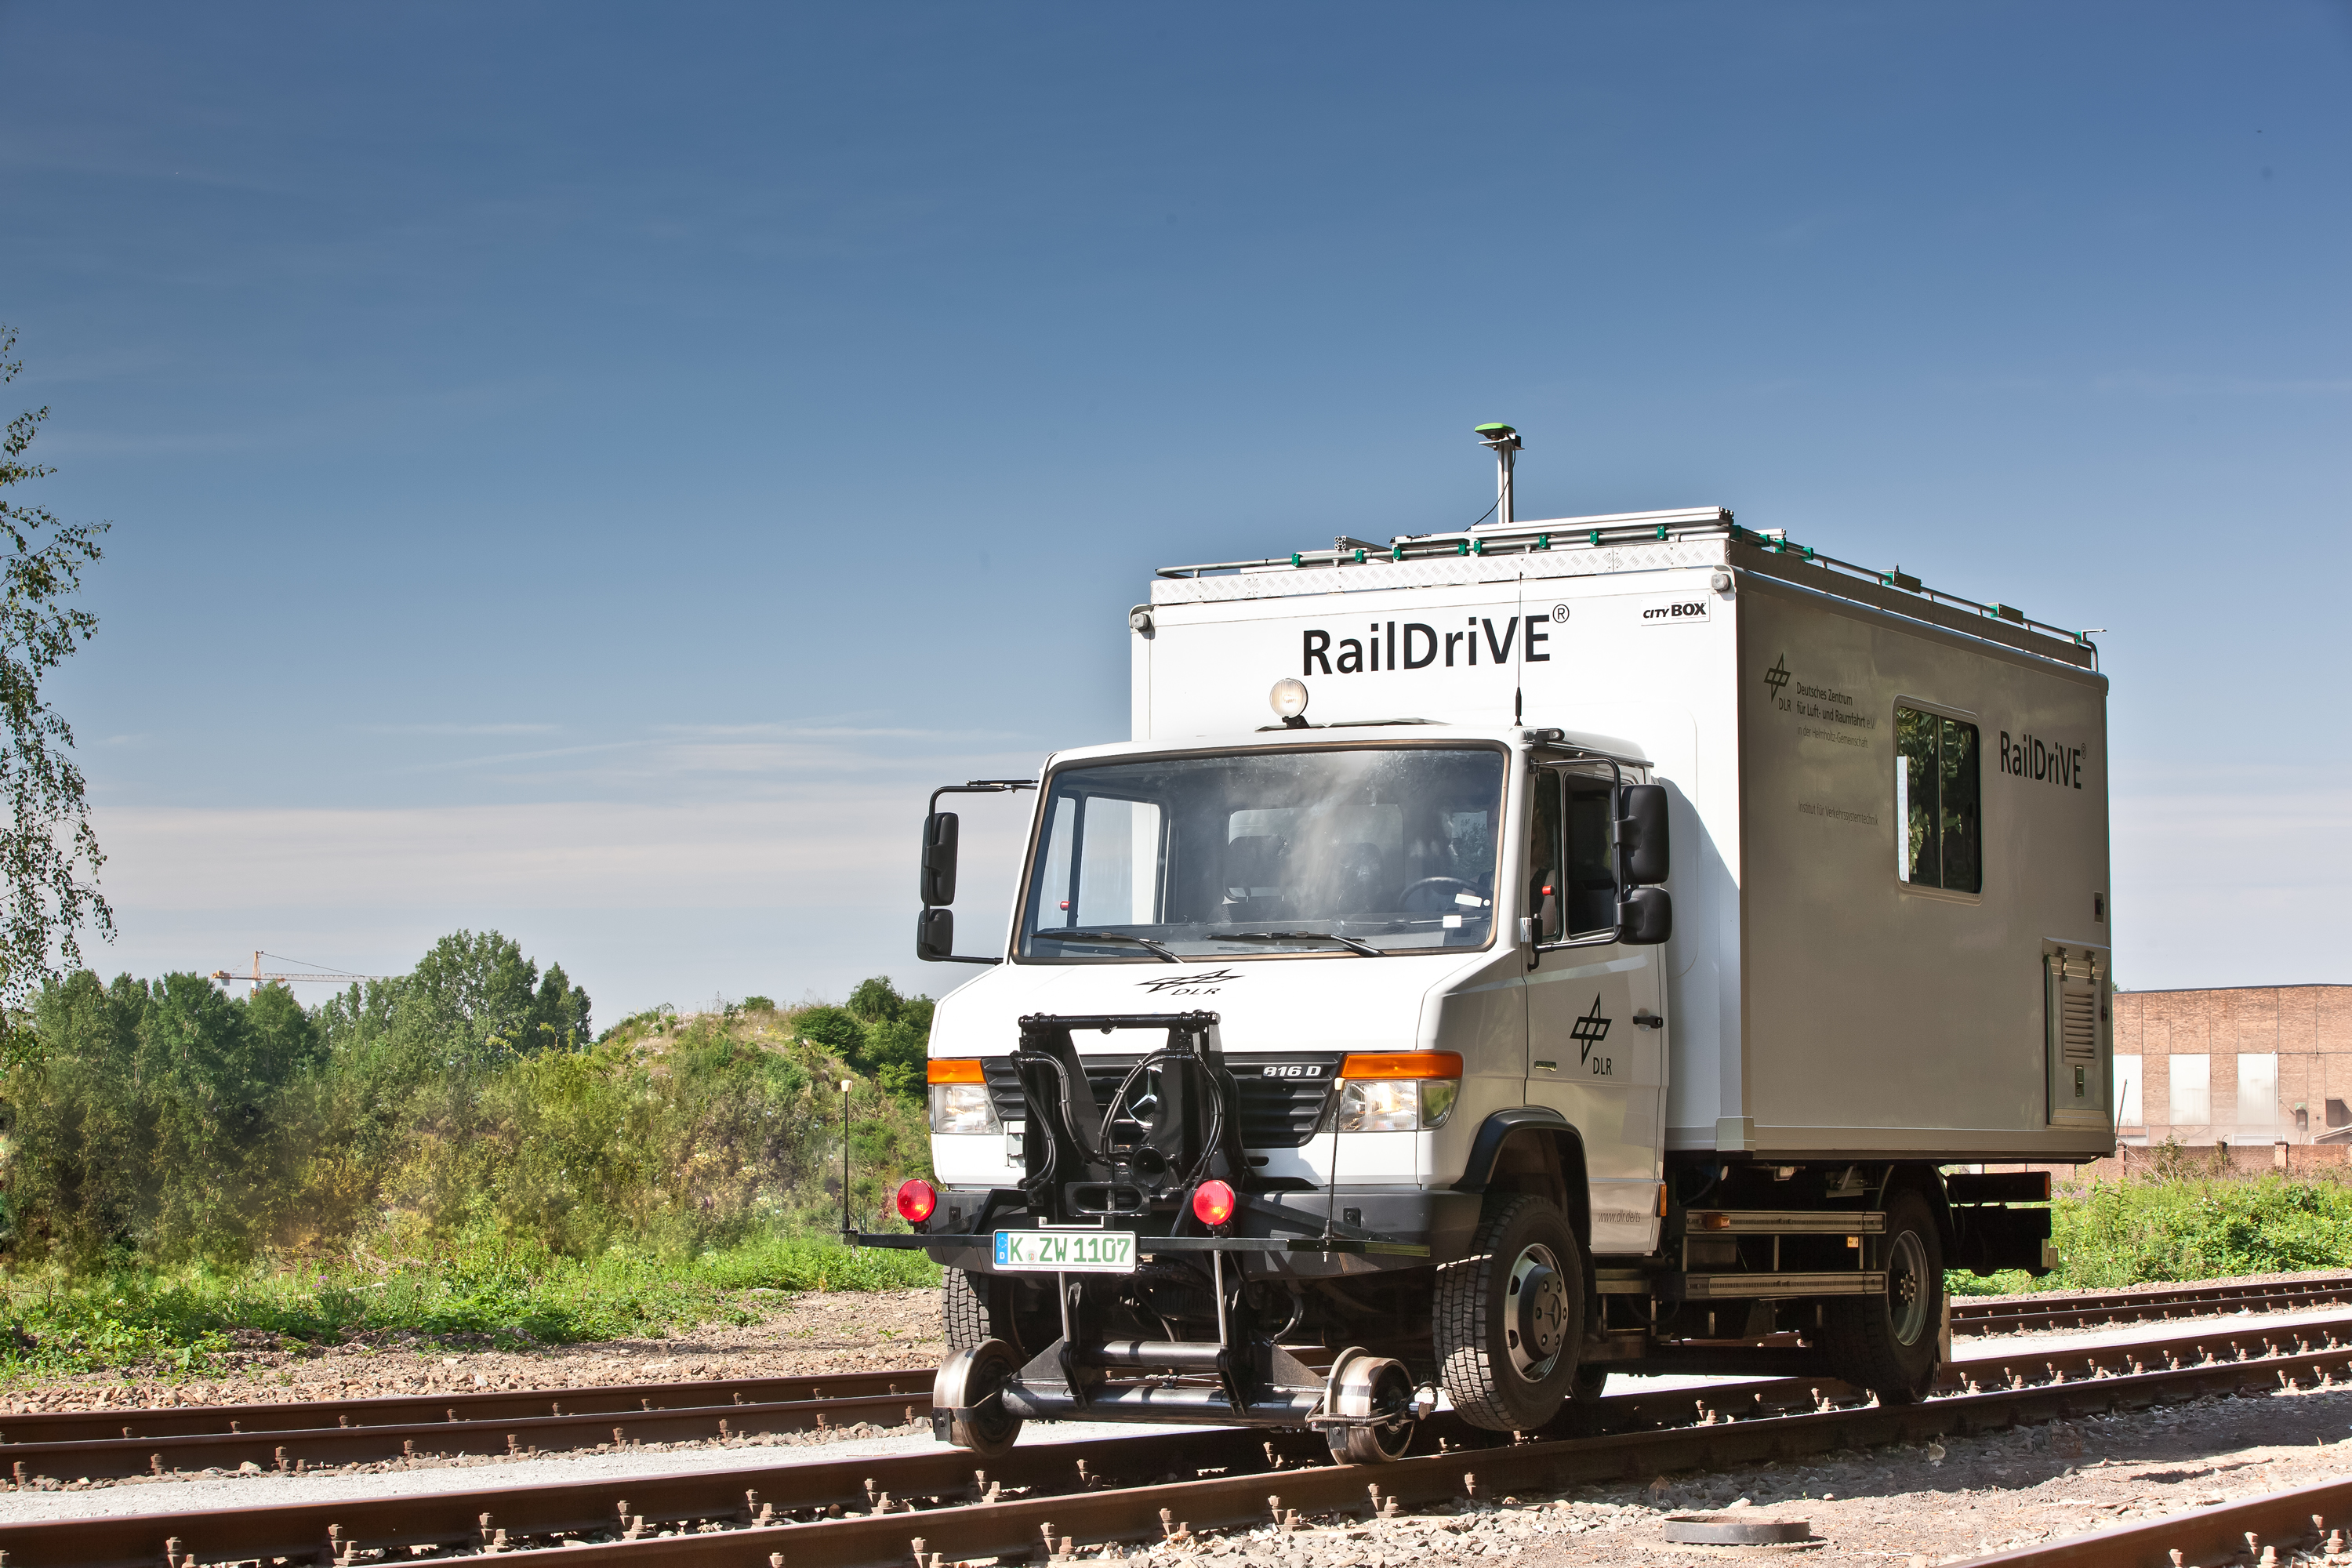 Rail2X Communication: rolling stock communicating with